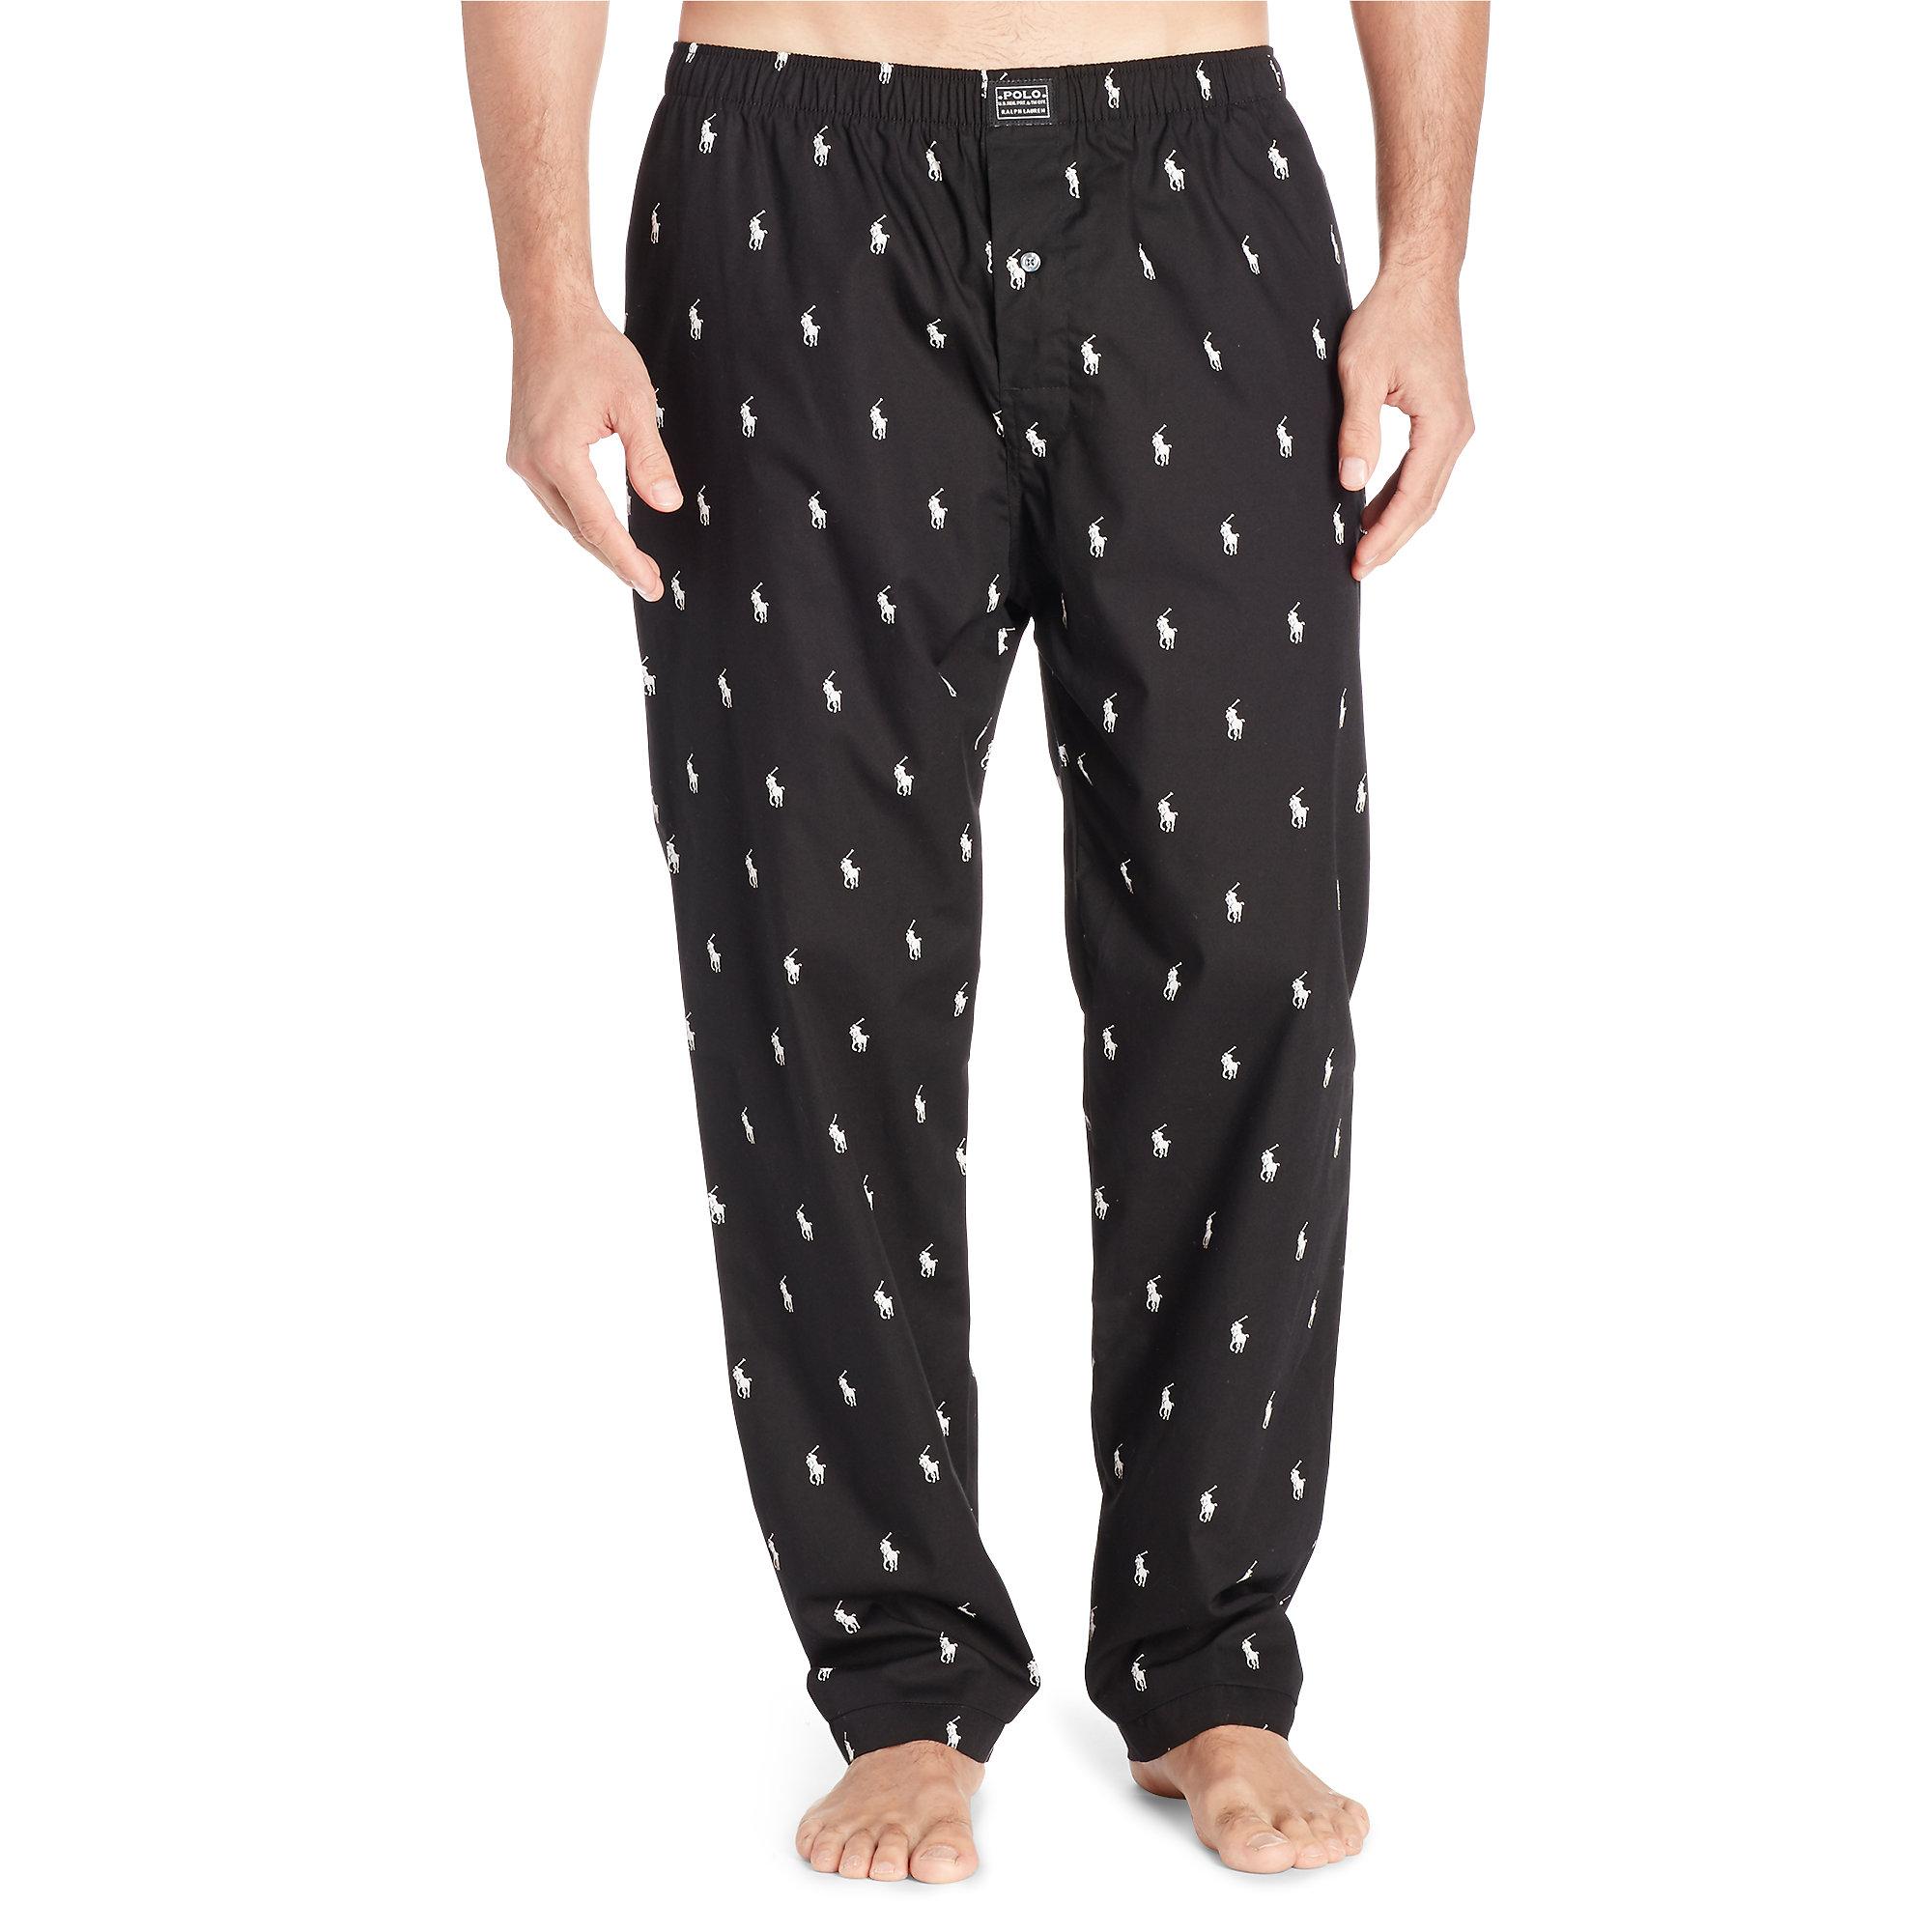 polo ralph lauren pajama pants women's